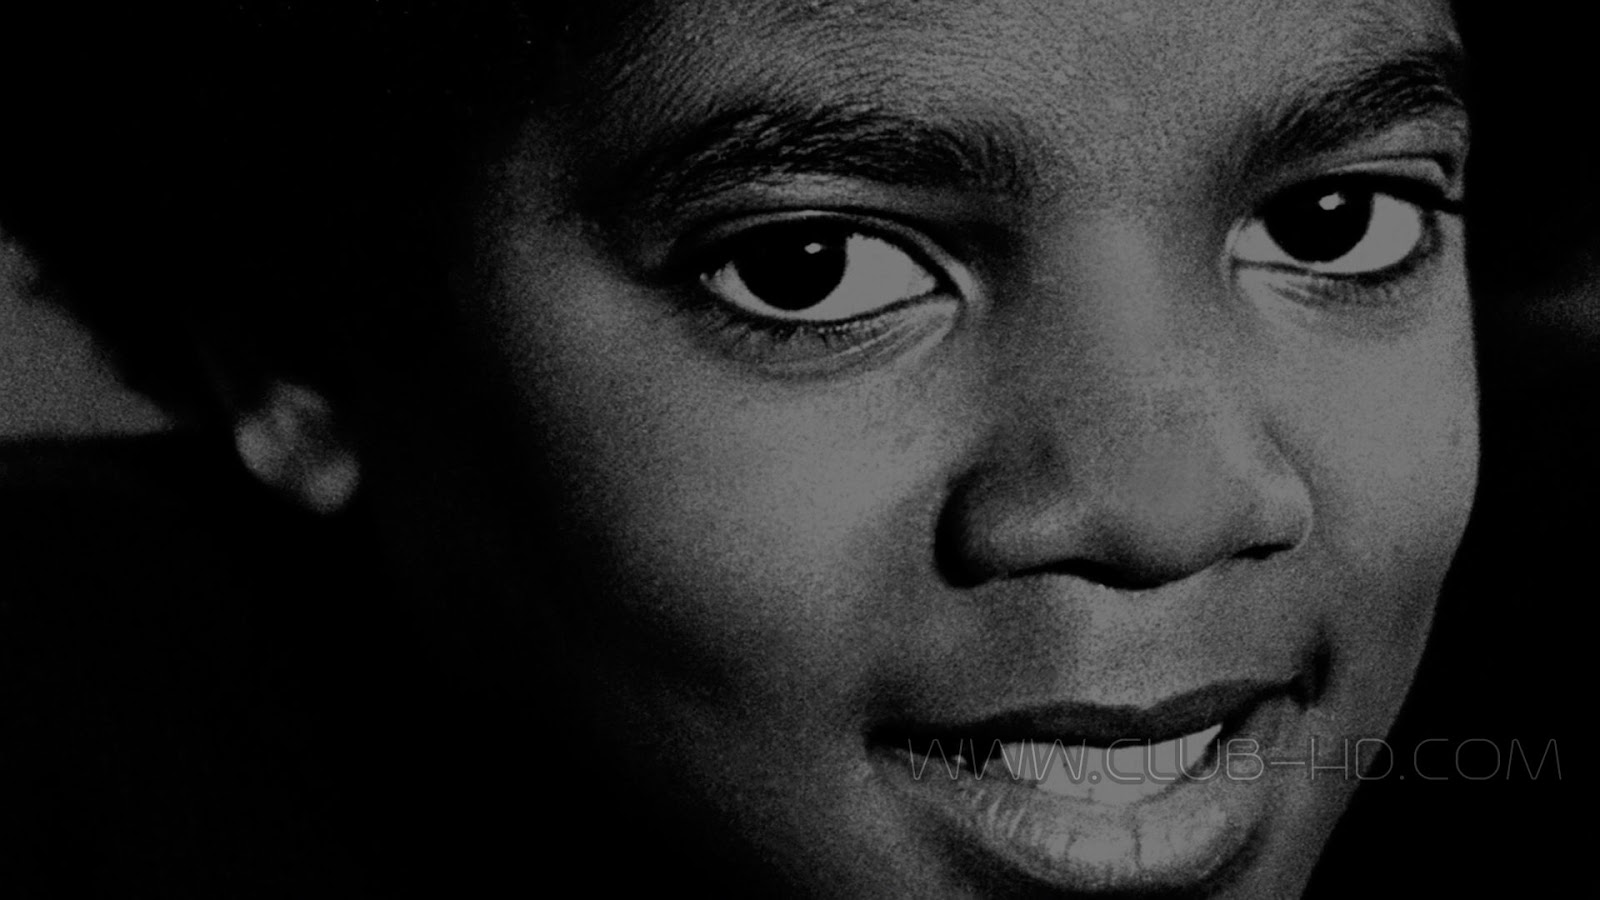 Michael-Jackson-The-Life-of-an-Icon-CAPTURA-1.jpg